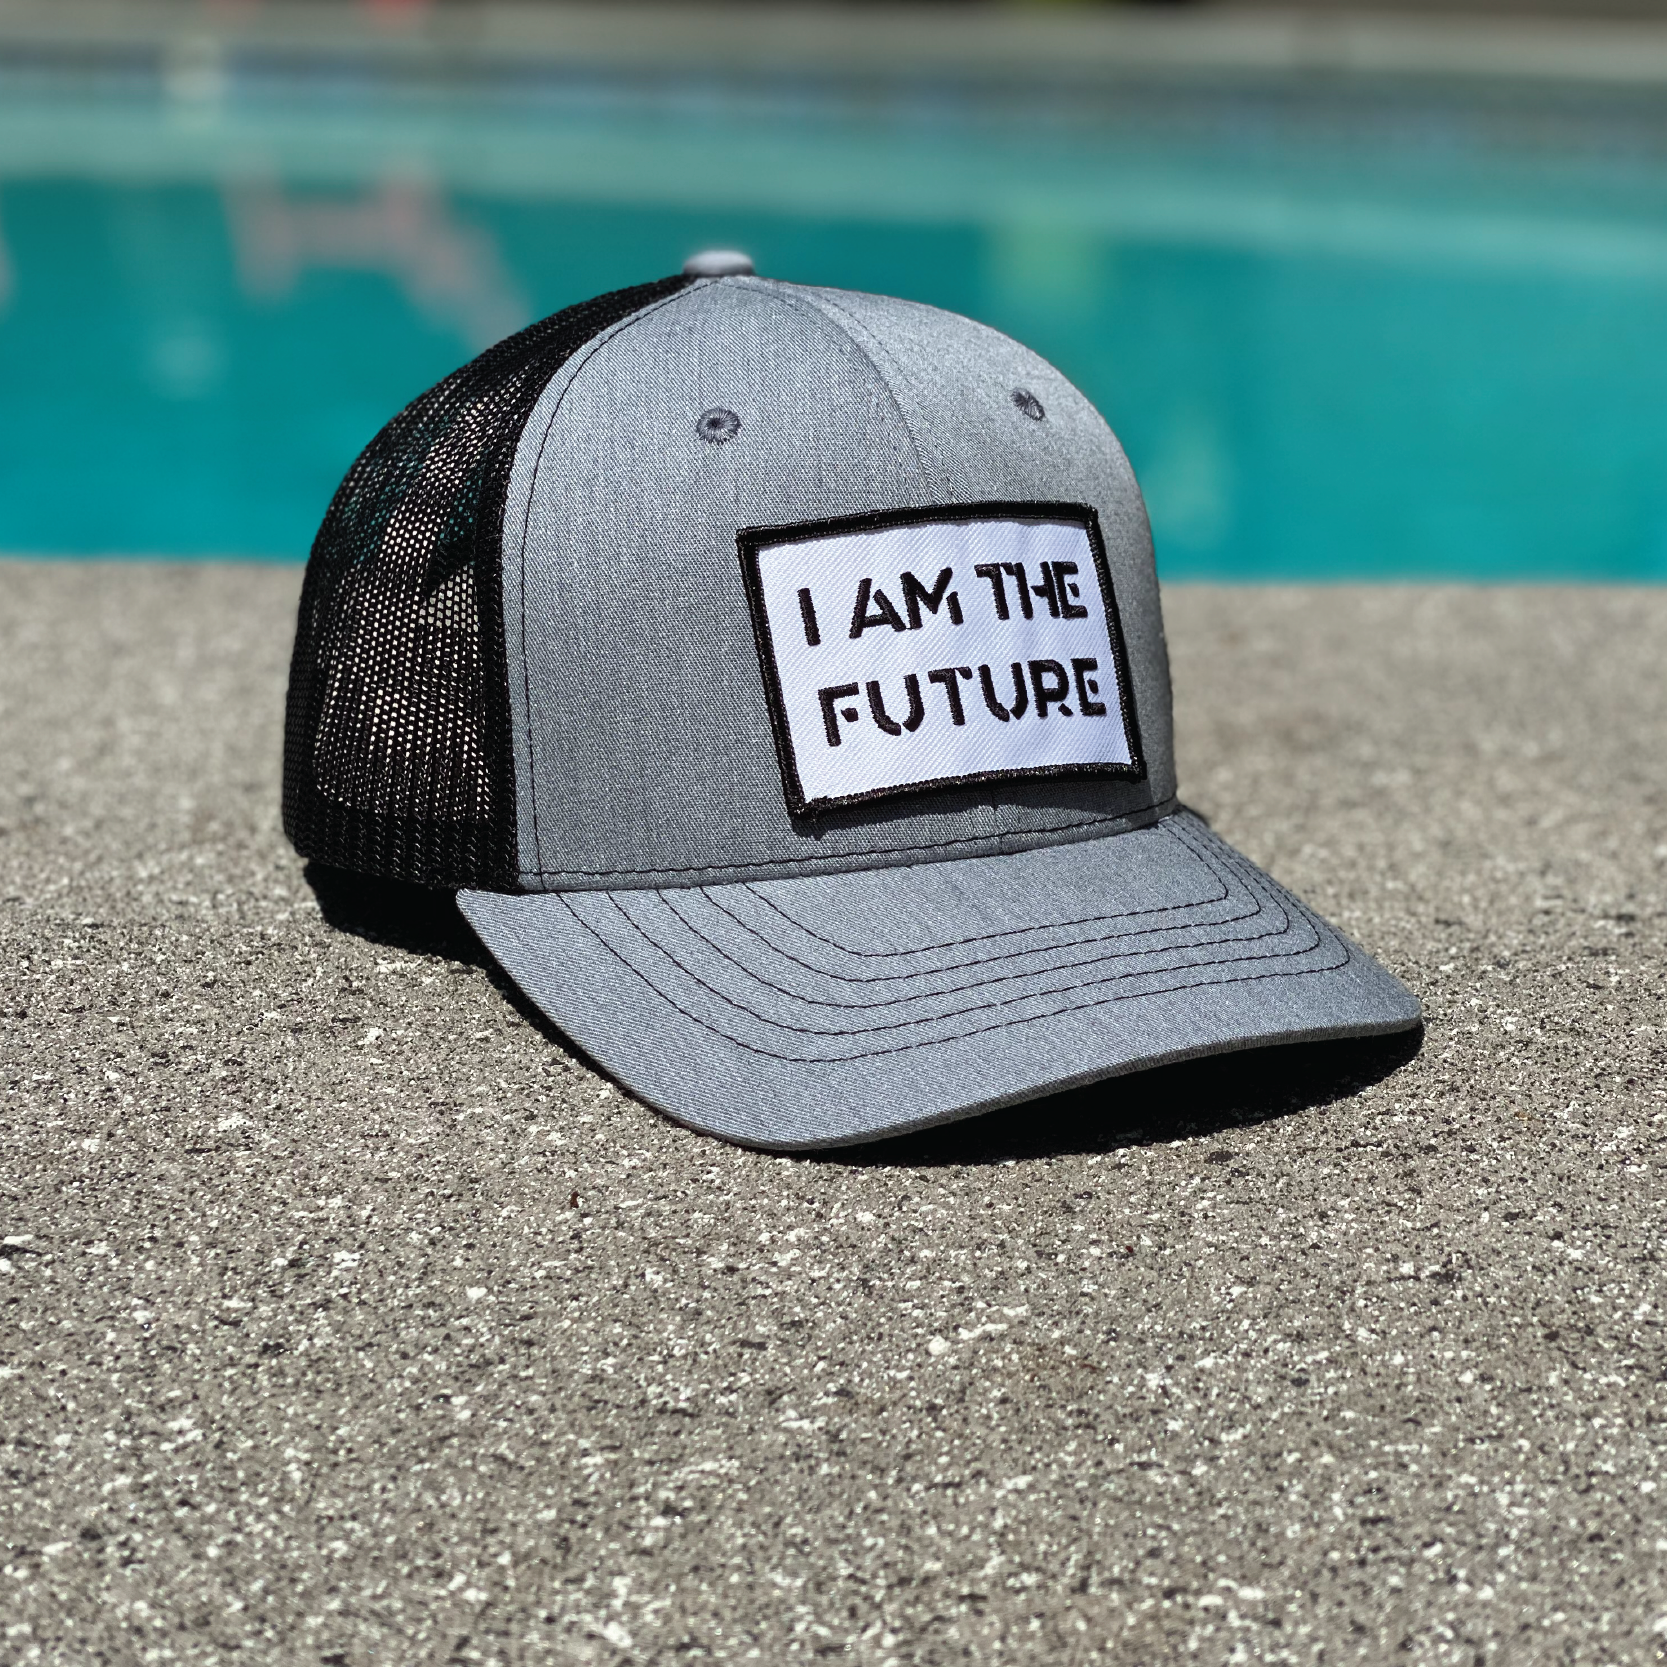 I AM THE FUTURE youth tucker hat